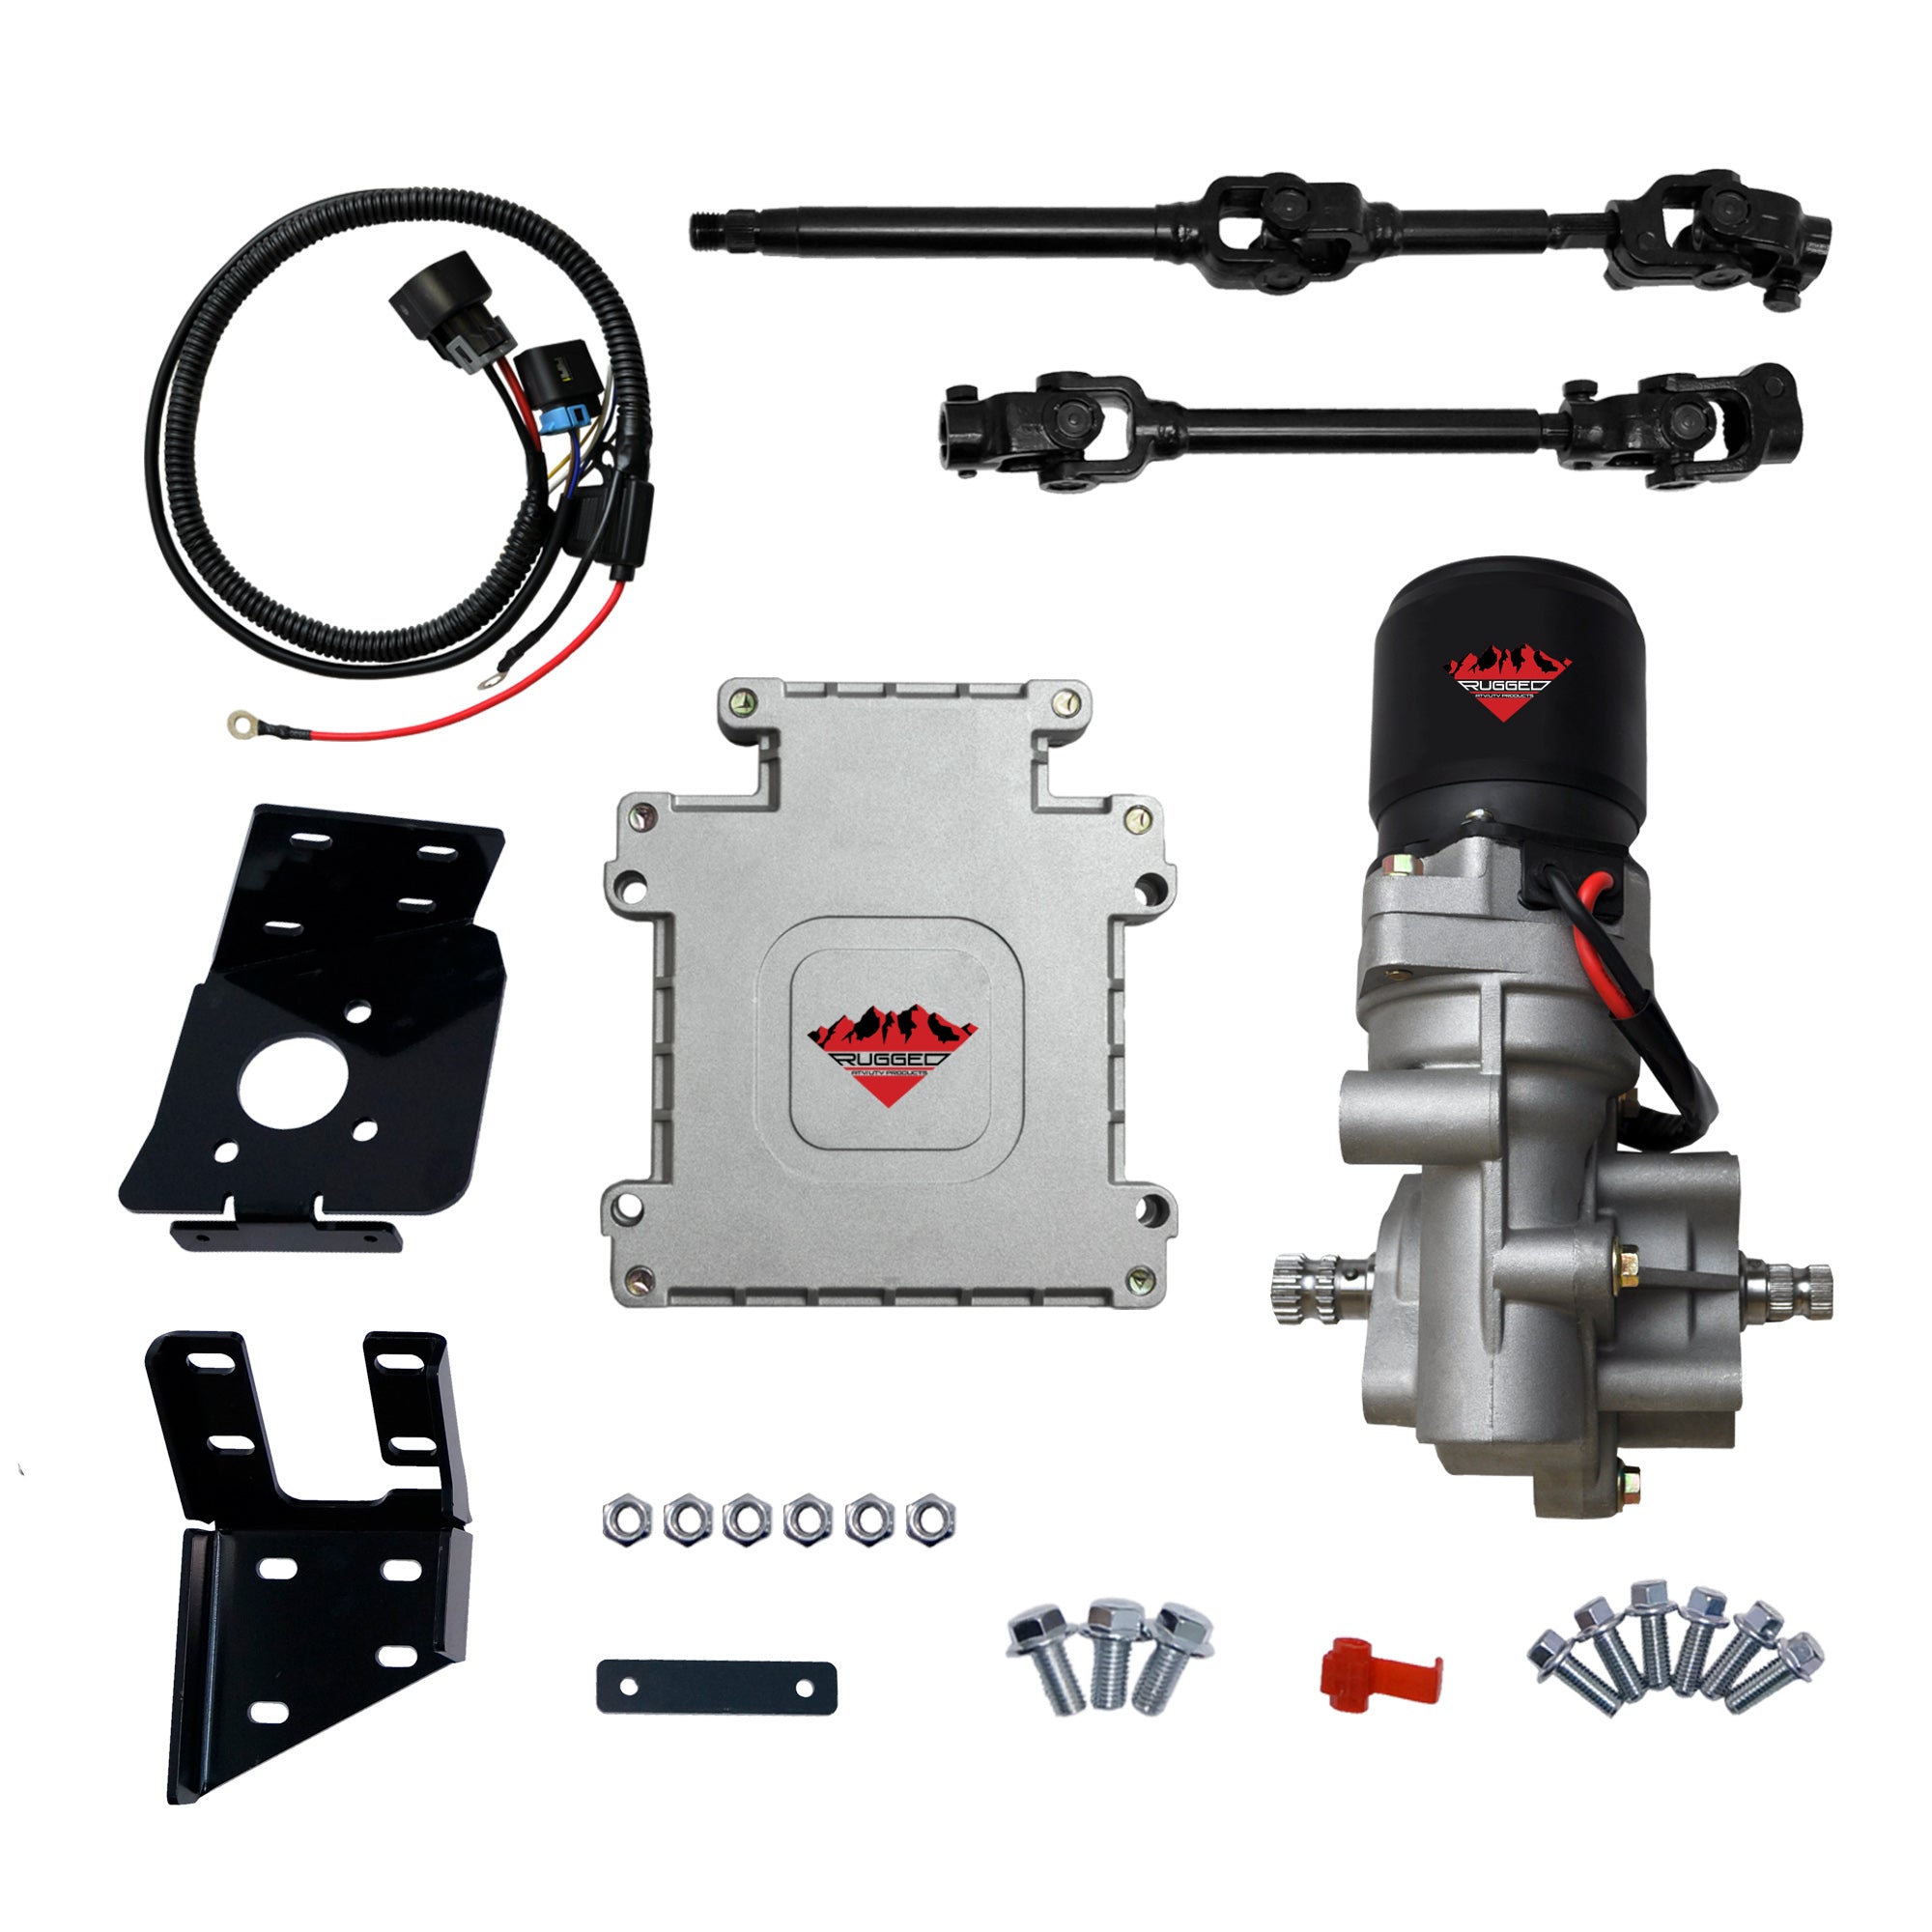 Electric Power Steering Kit for Polaris Sportsman 500 